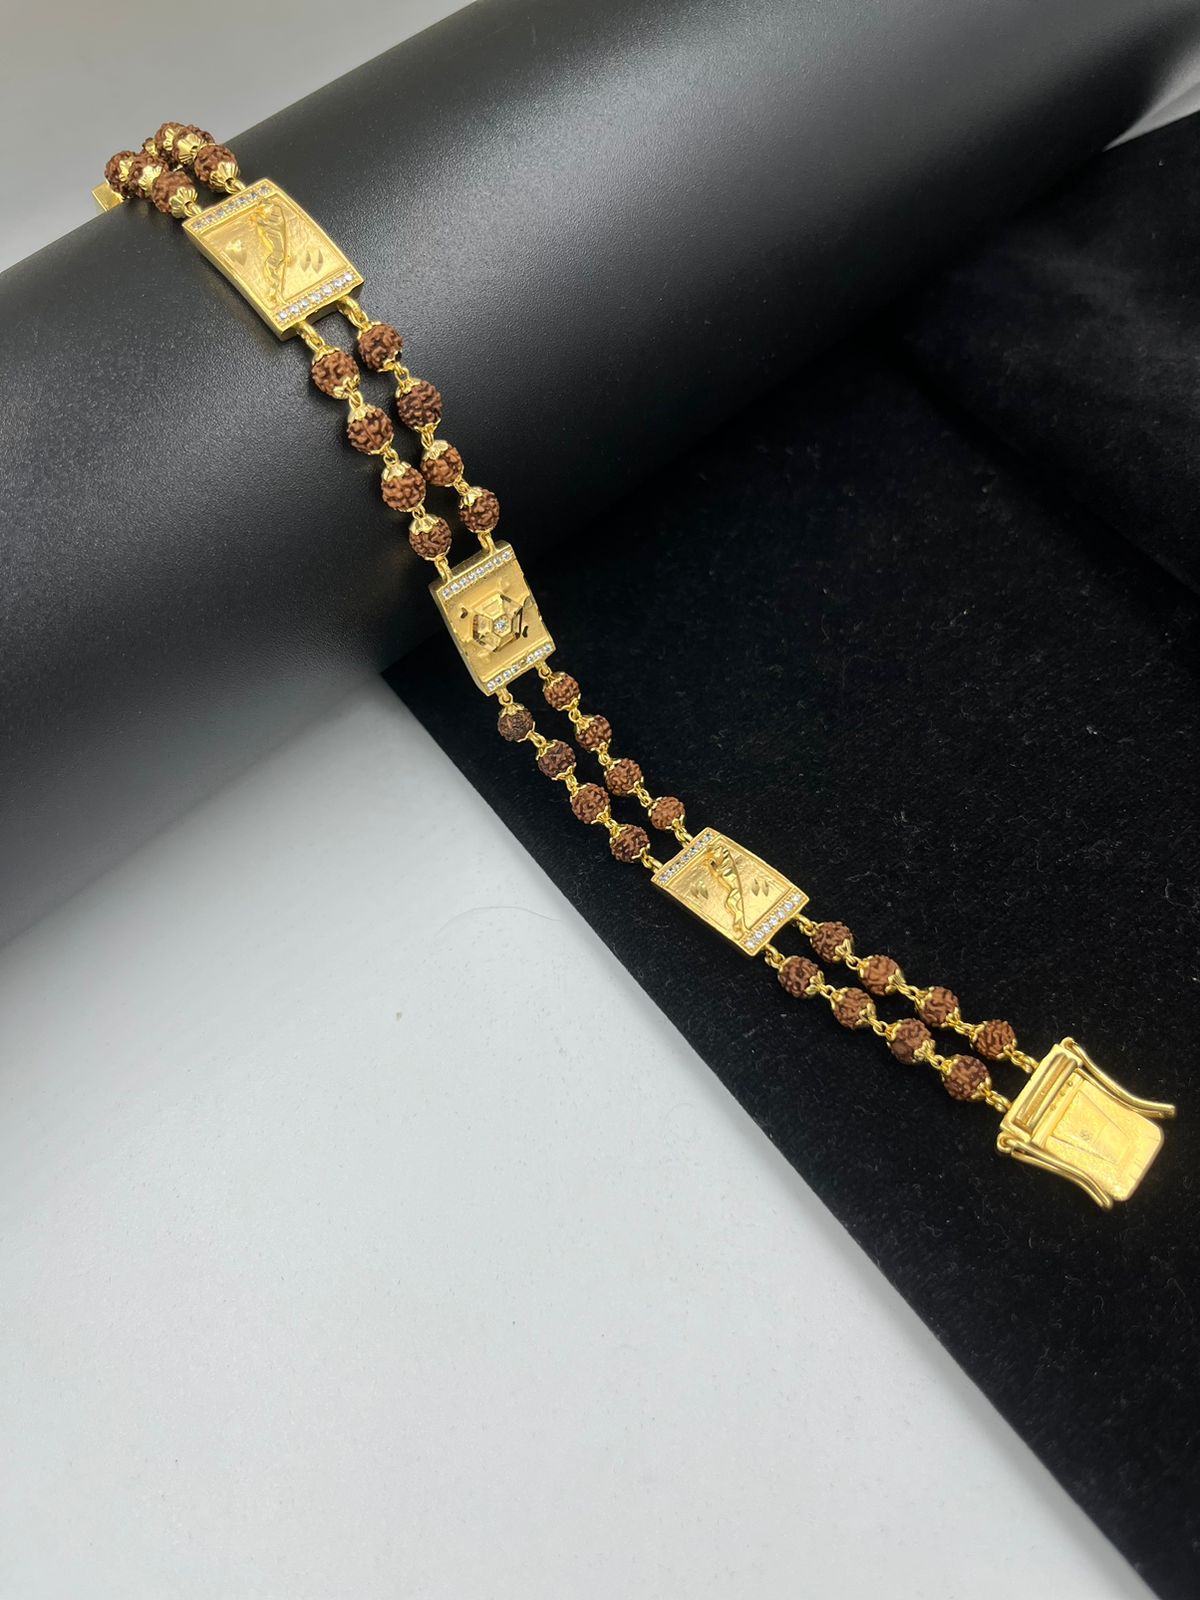 22k yellow gold Daily wear Finest Jaguar design Bracelet with Rhodium Color  | eBay